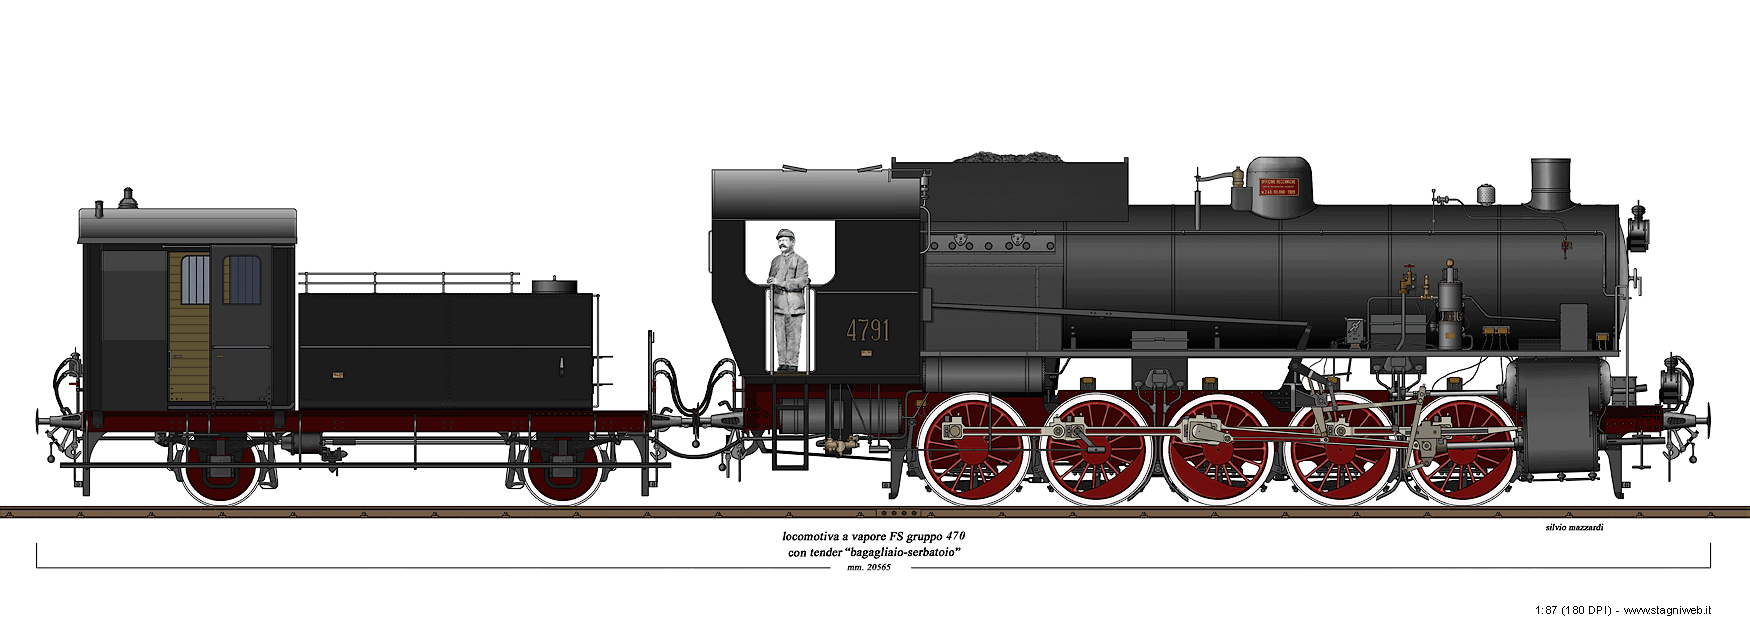 Locomotive a vapore - Gr. 470